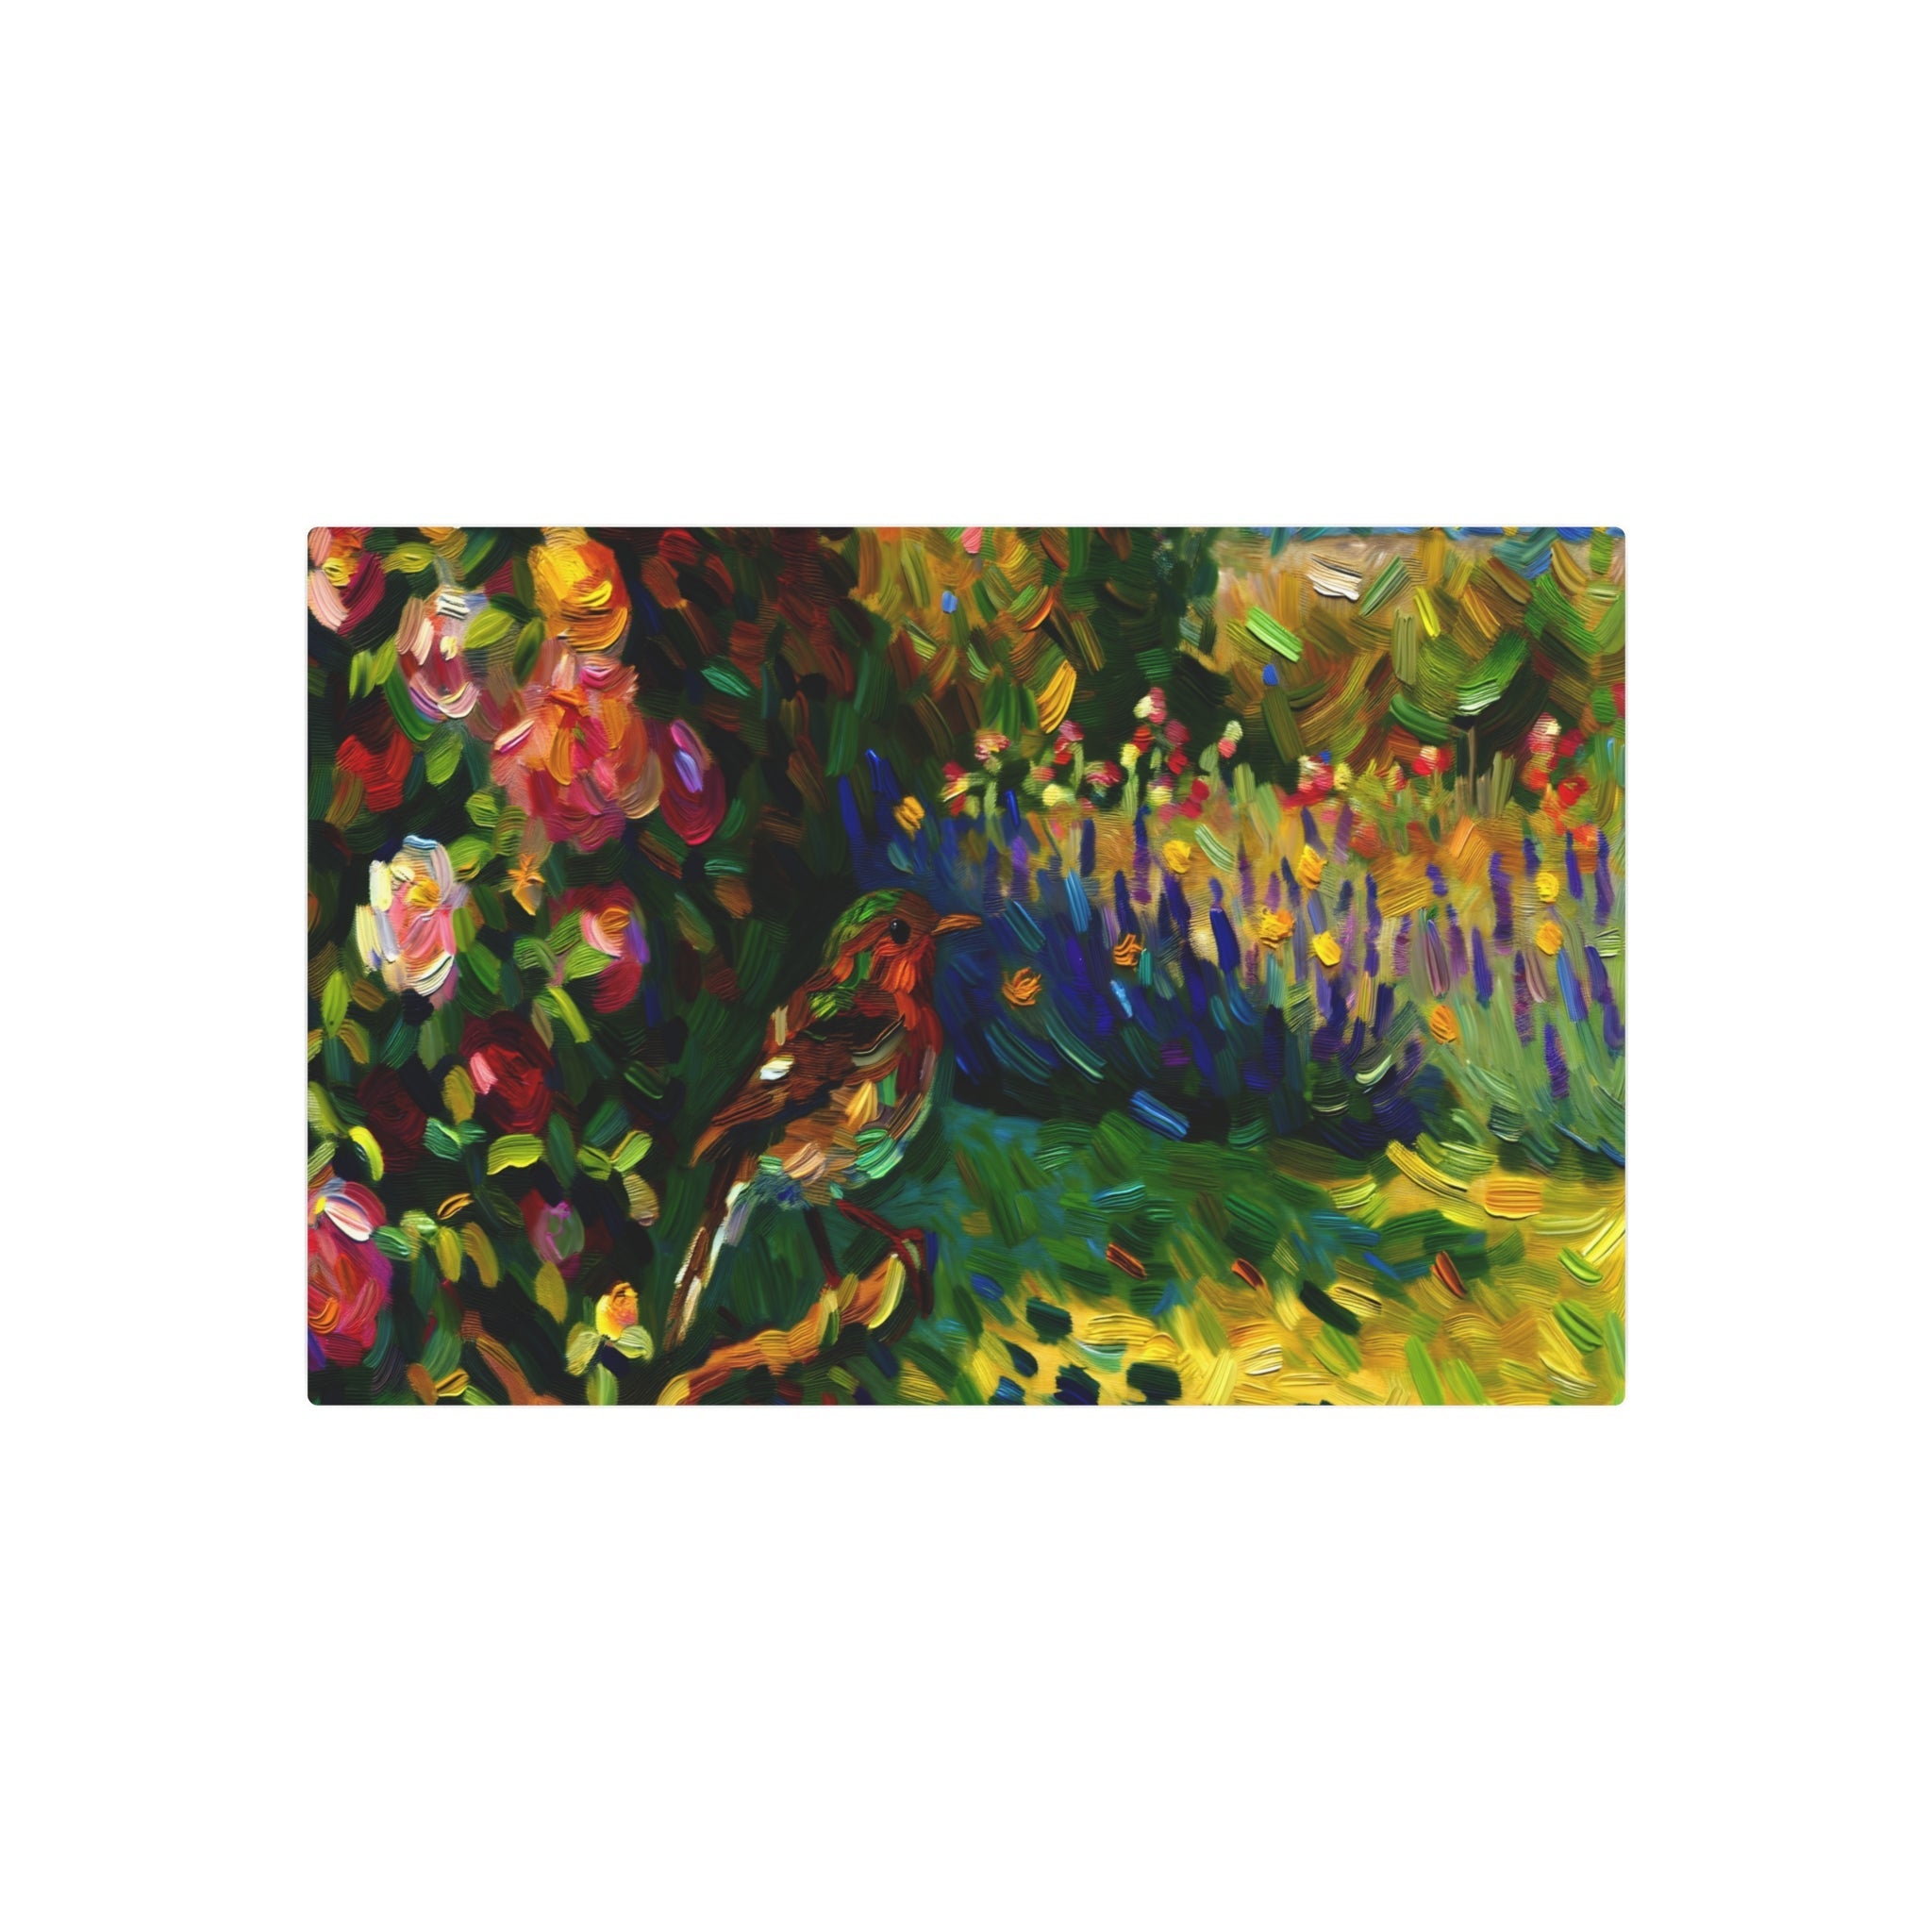 Metal Poster Art | "Impressionist Western Art Style - Vibrant Sunlit Garden with Bird amongst Flowers" - Metal Poster Art 30″ x 20″ (Horizontal) 0.12''